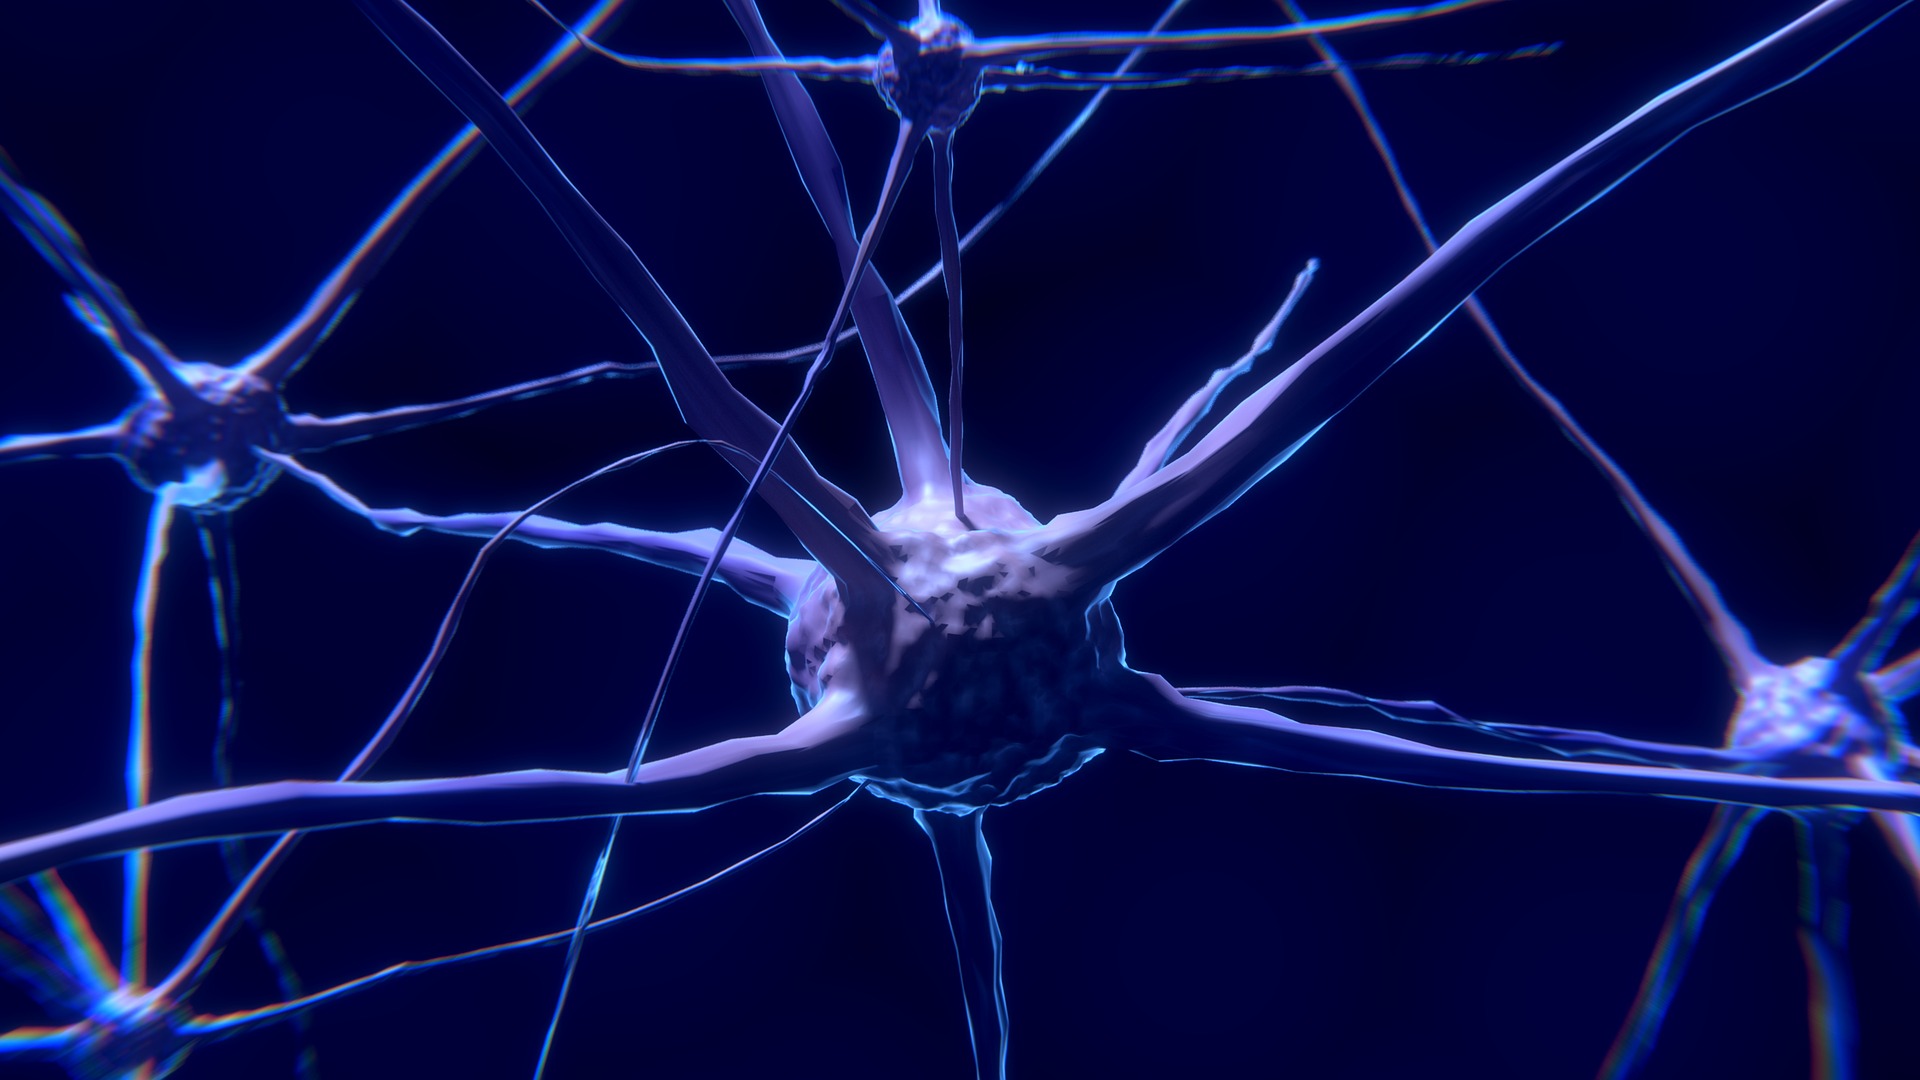 Brain cells - Neuroscience research